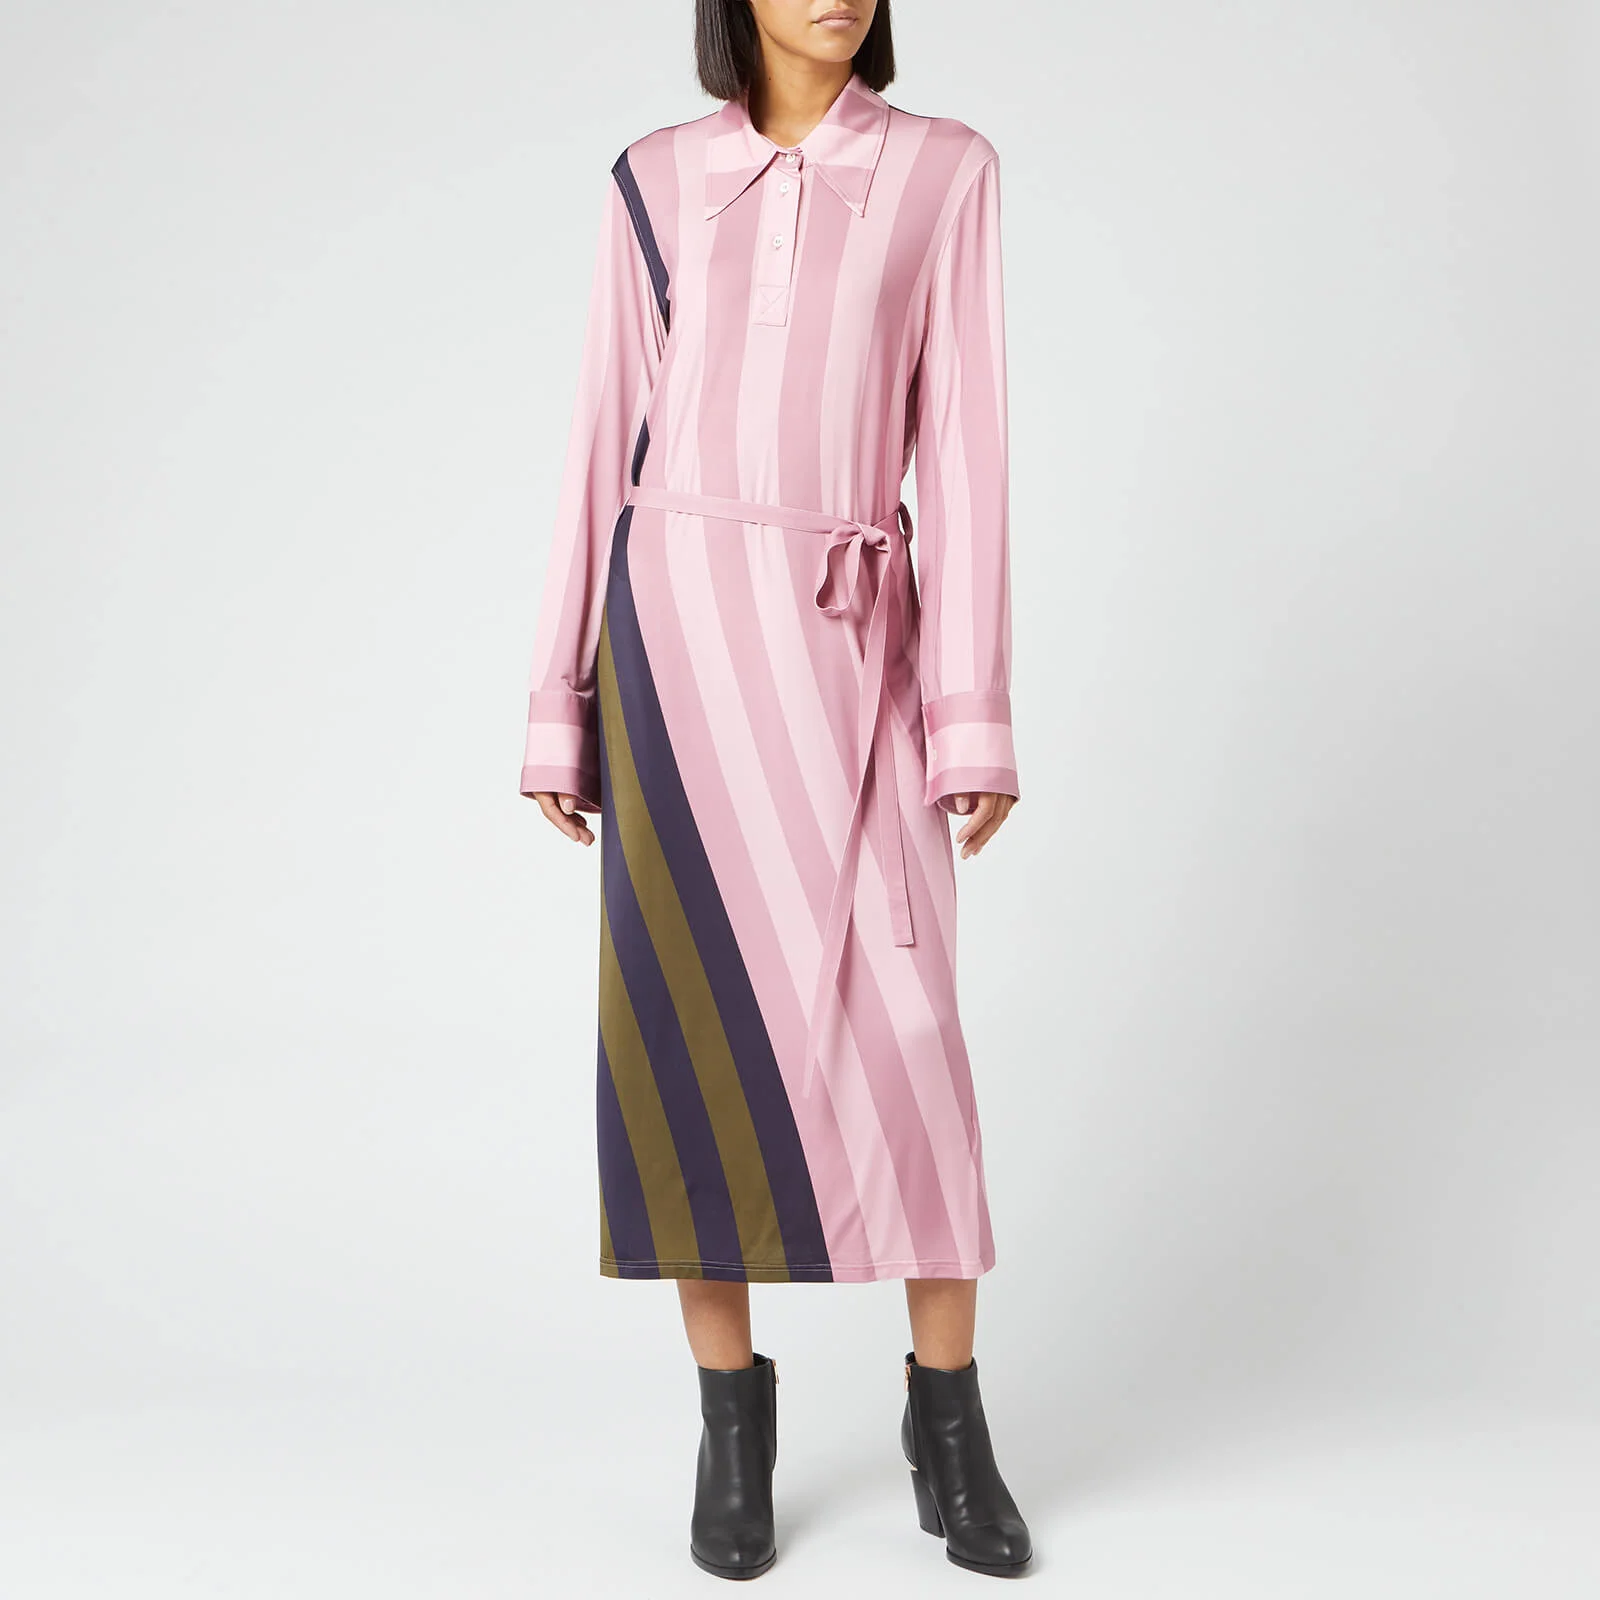 JW Anderson Women's Warped Stripe Print Polo Dress - Light Pink Image 1